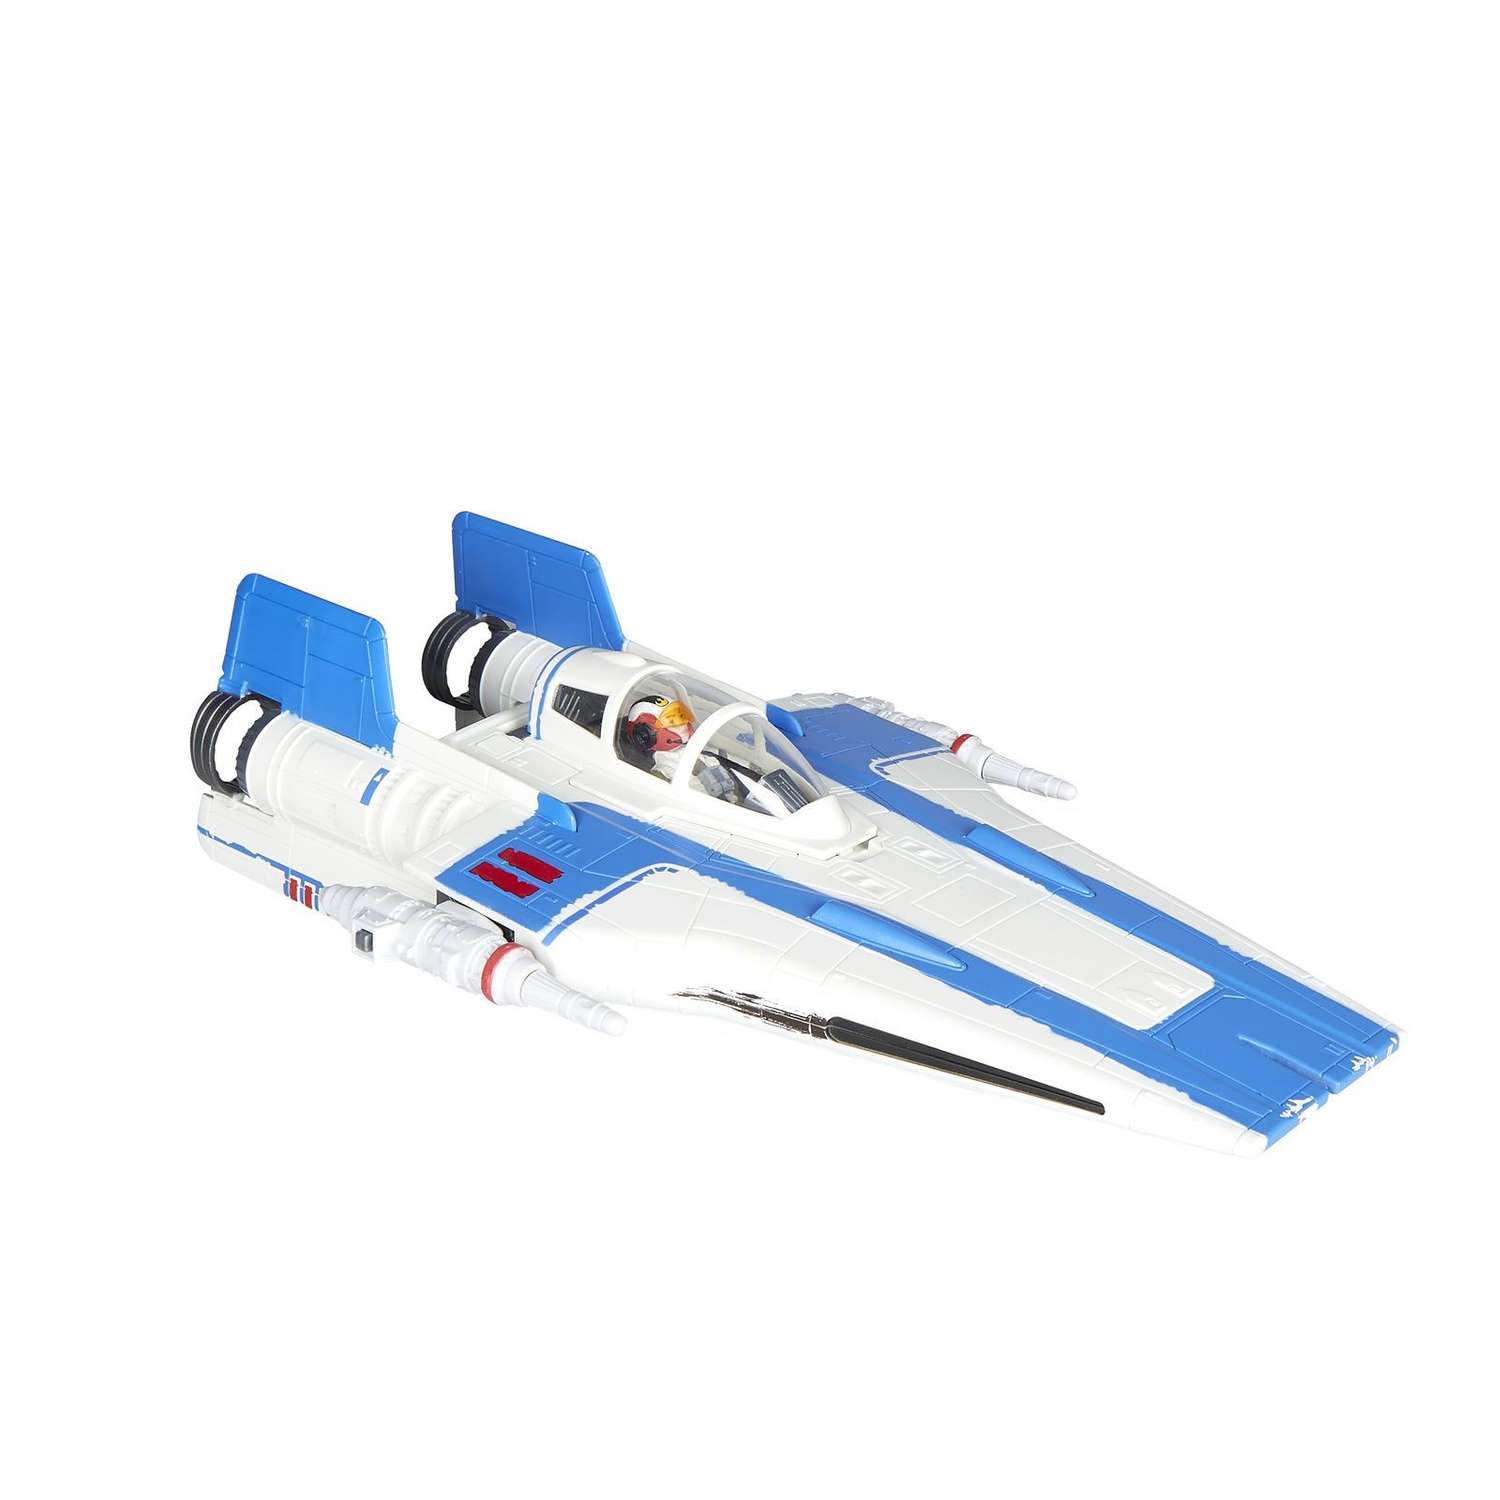 Игрушка Star Wars (SW) Транспорт Звездный истребитель a wing E1264EU4 E0326EU4 - фото 11